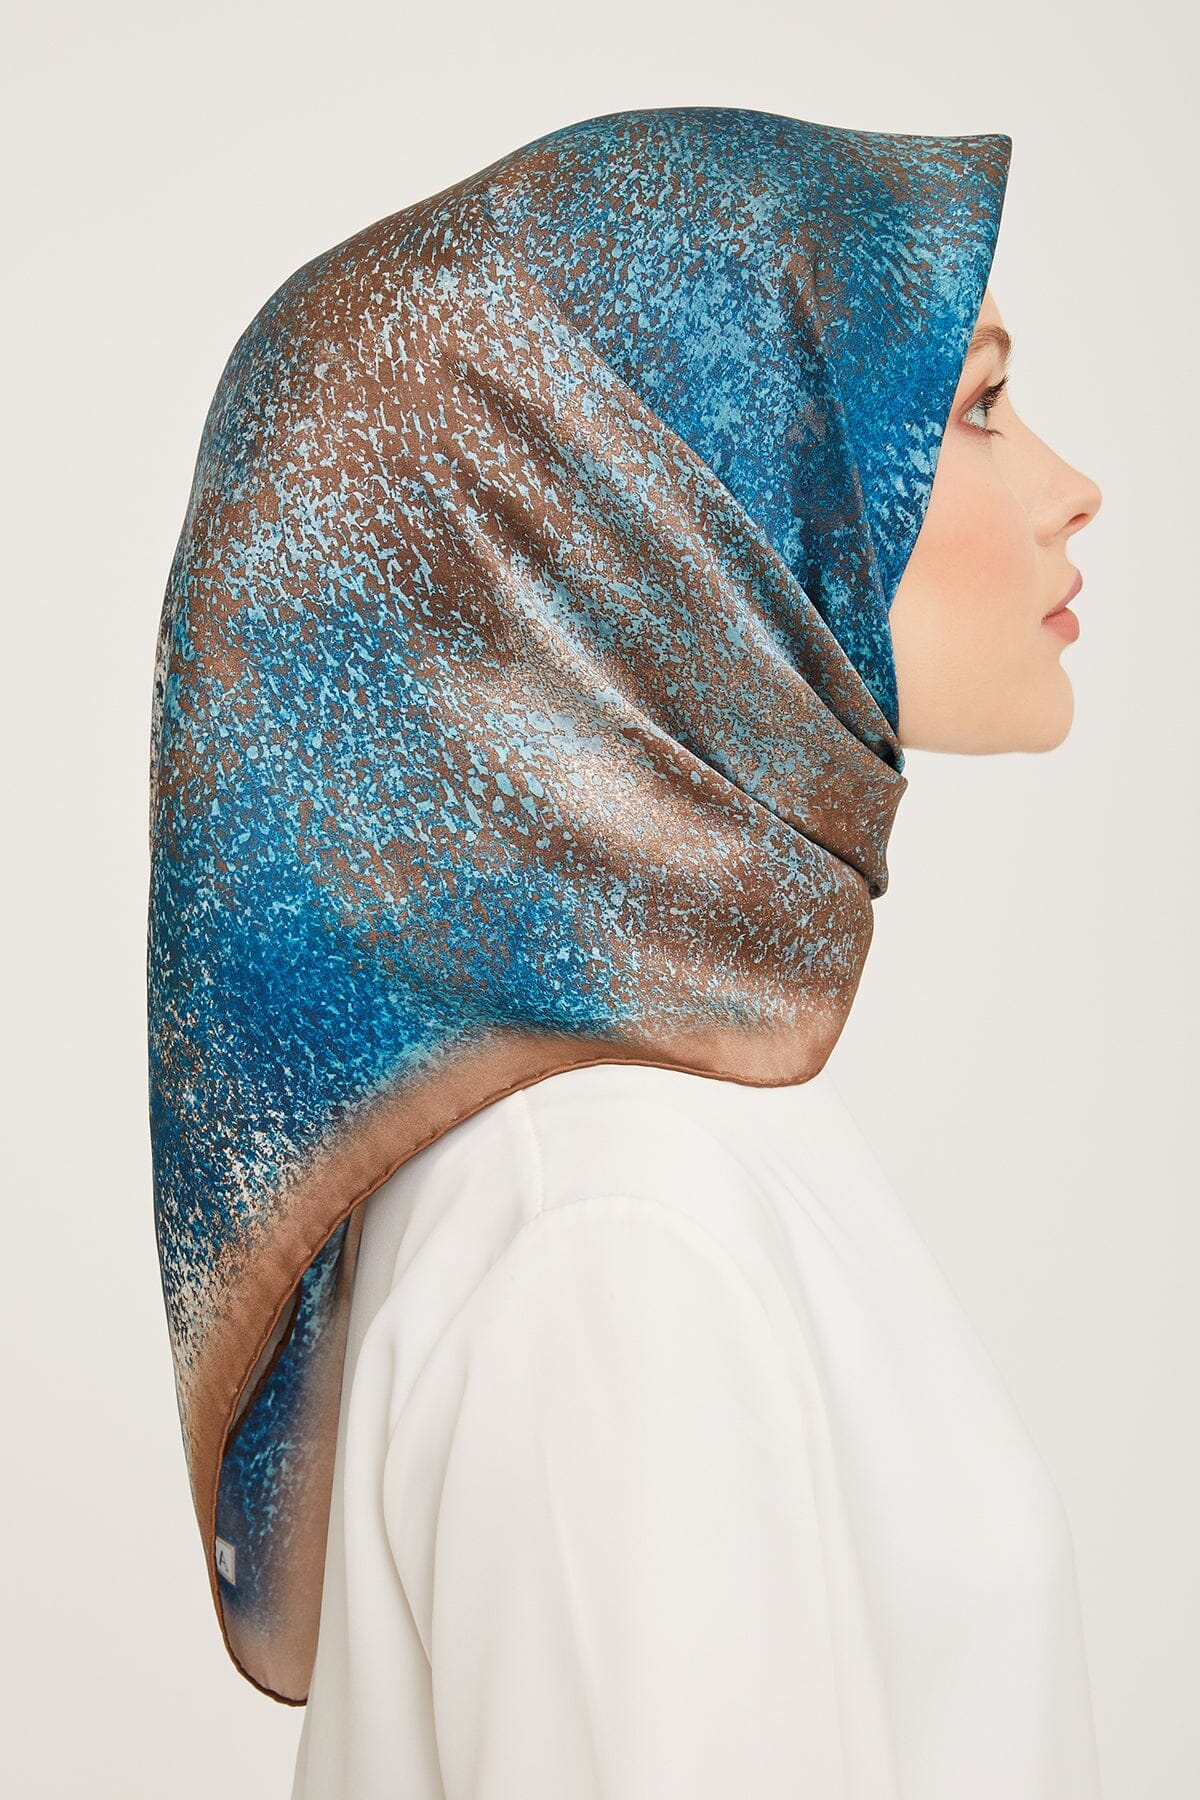 Armine Claude Everyday Silk Scarf #5 Silk Hijabs,Armine Armine 